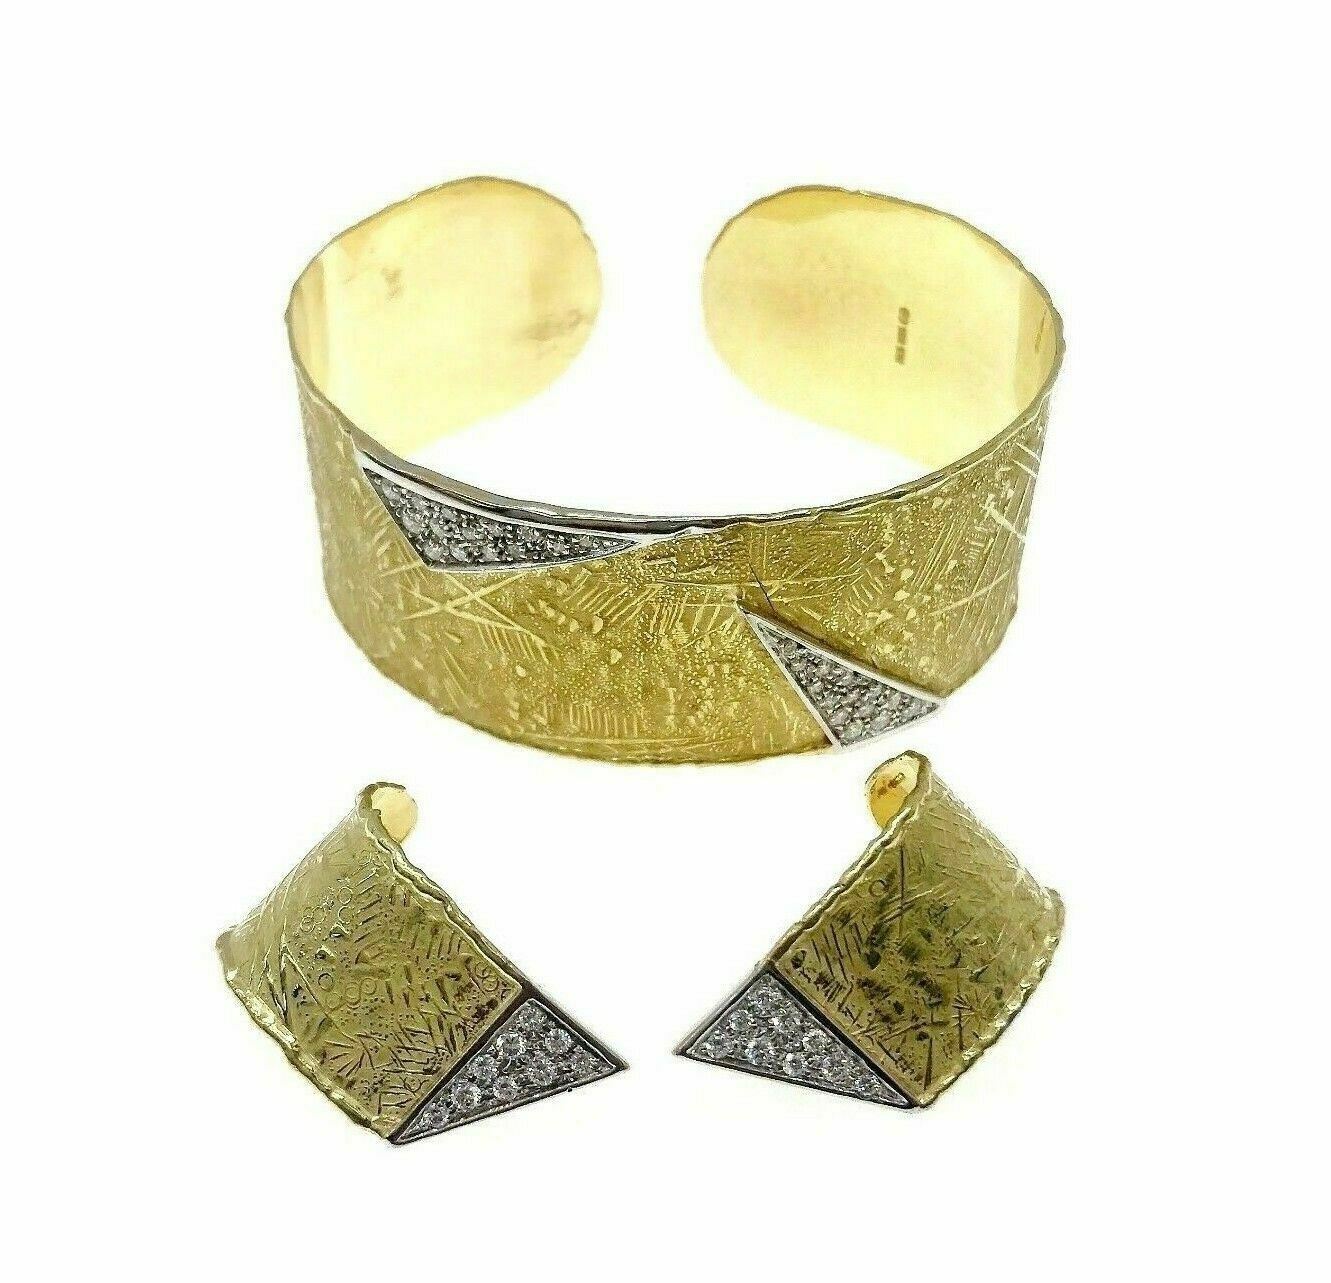 UnoAerre Italian Made 18K Yellow Gold and Diamond Textured Bangle & Earrings Set